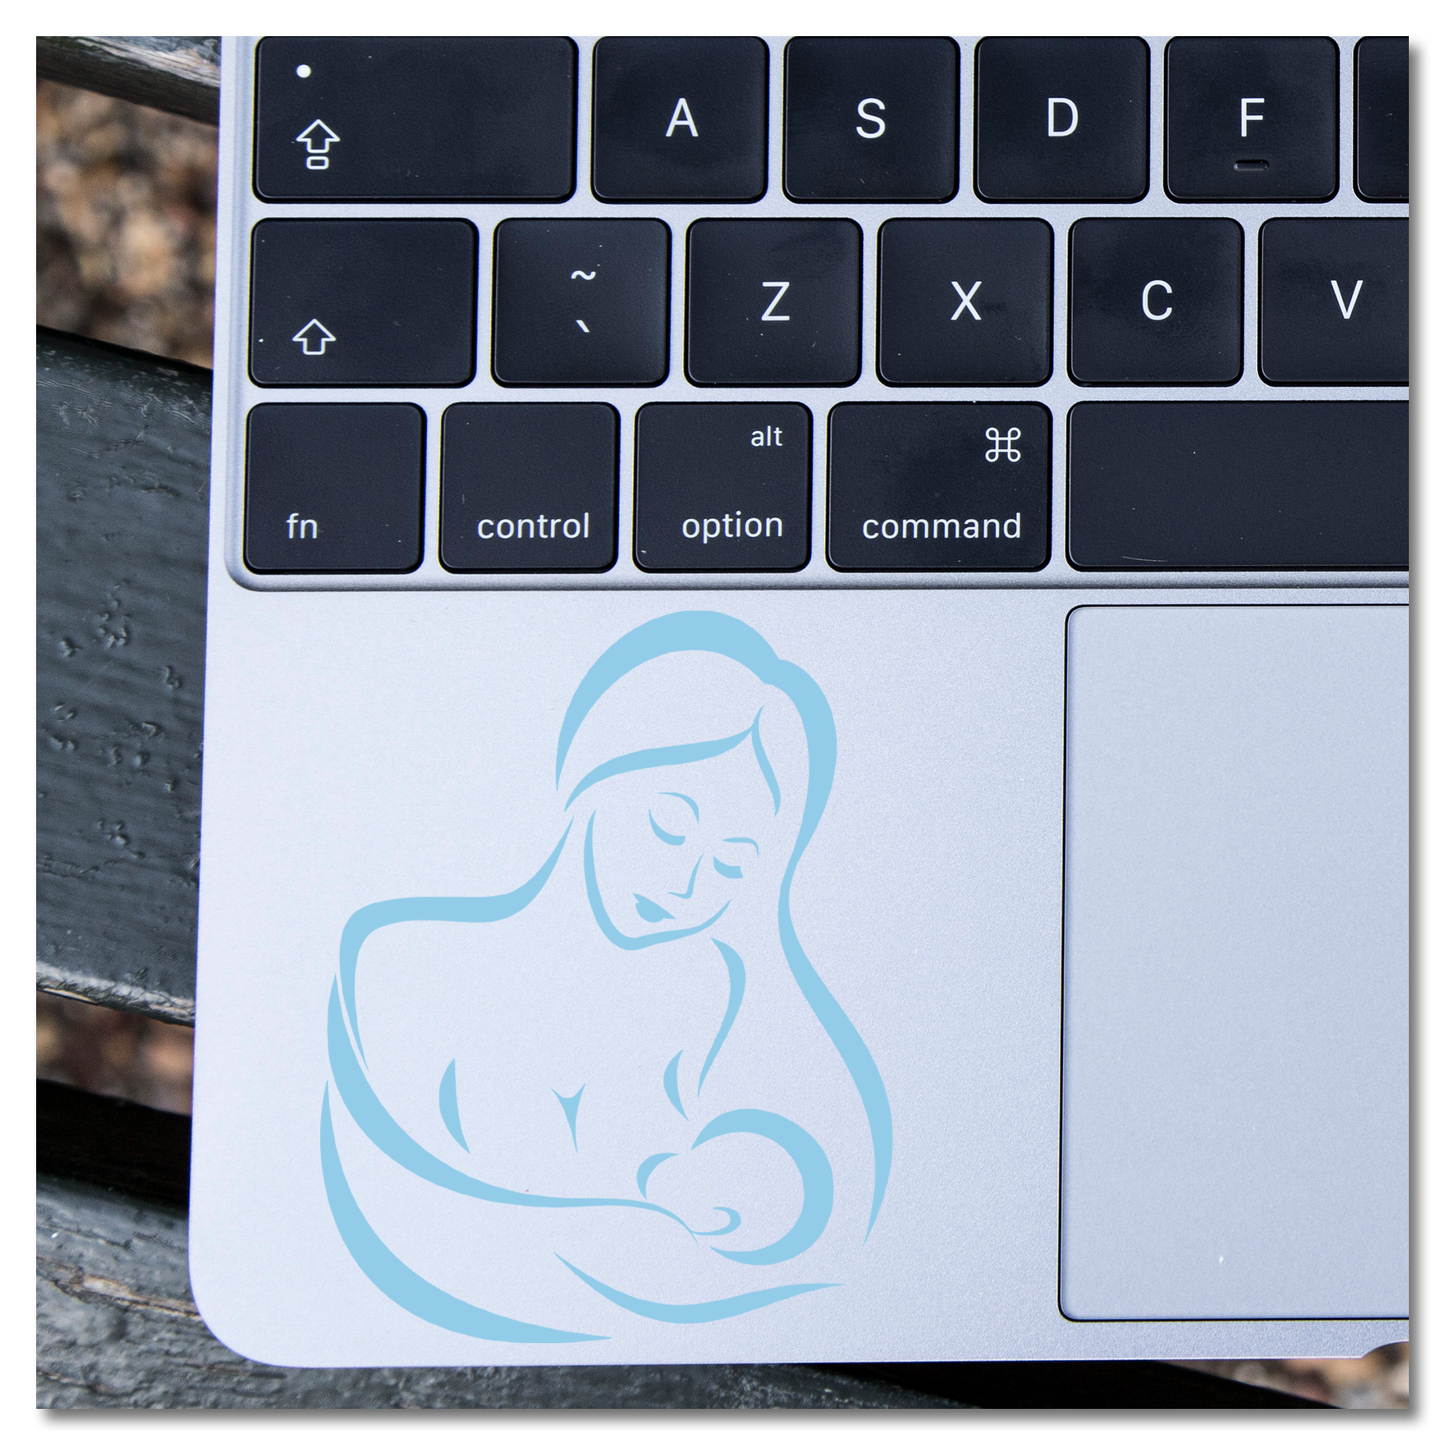 Mother Breastfeeding Vinyl Decal Sticker